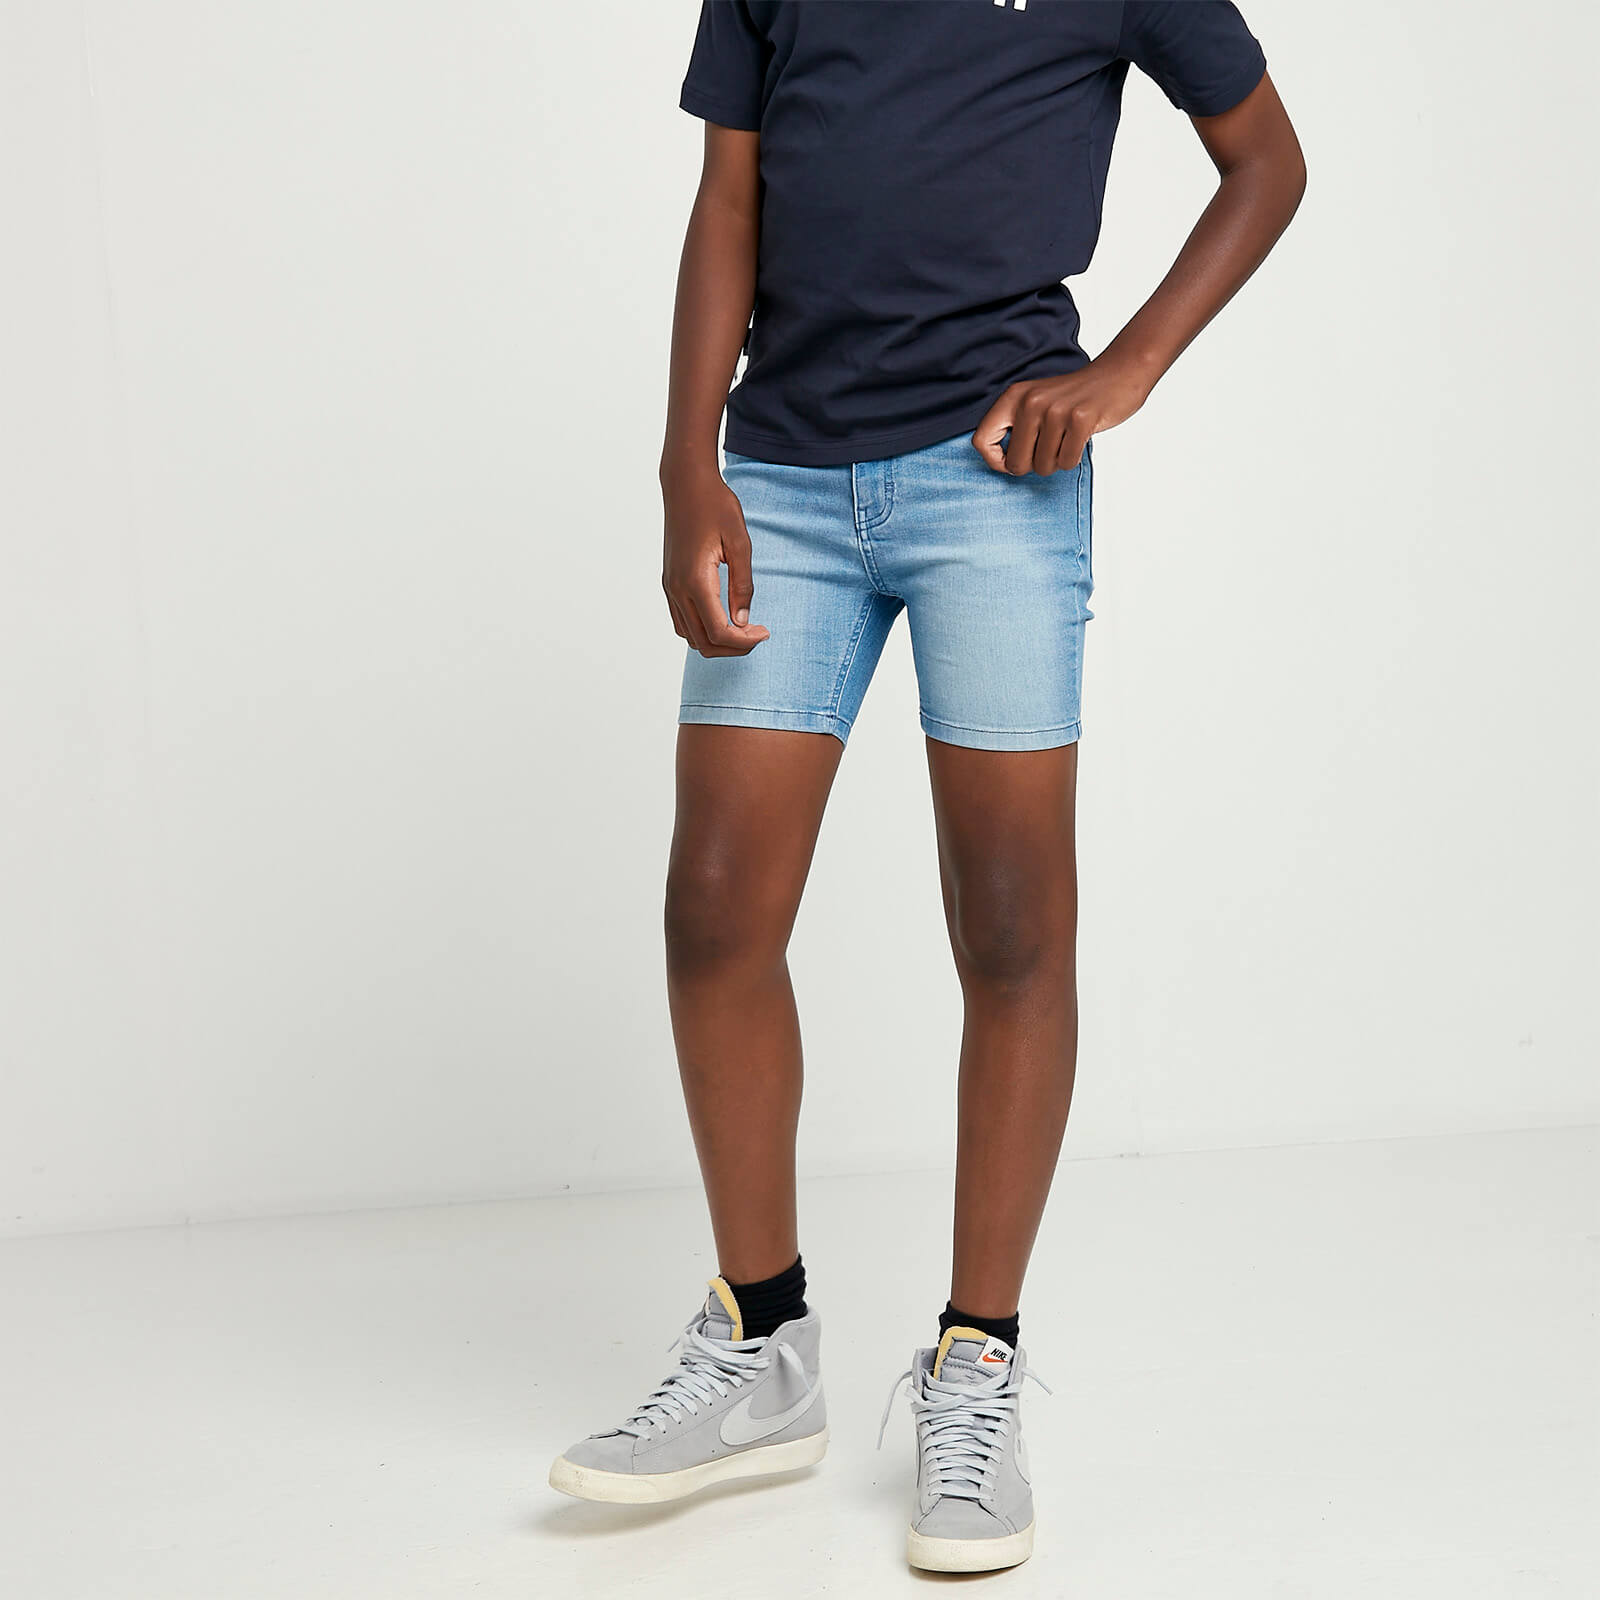 junior sustainable denim shorts – light blue wash - 12-13 years